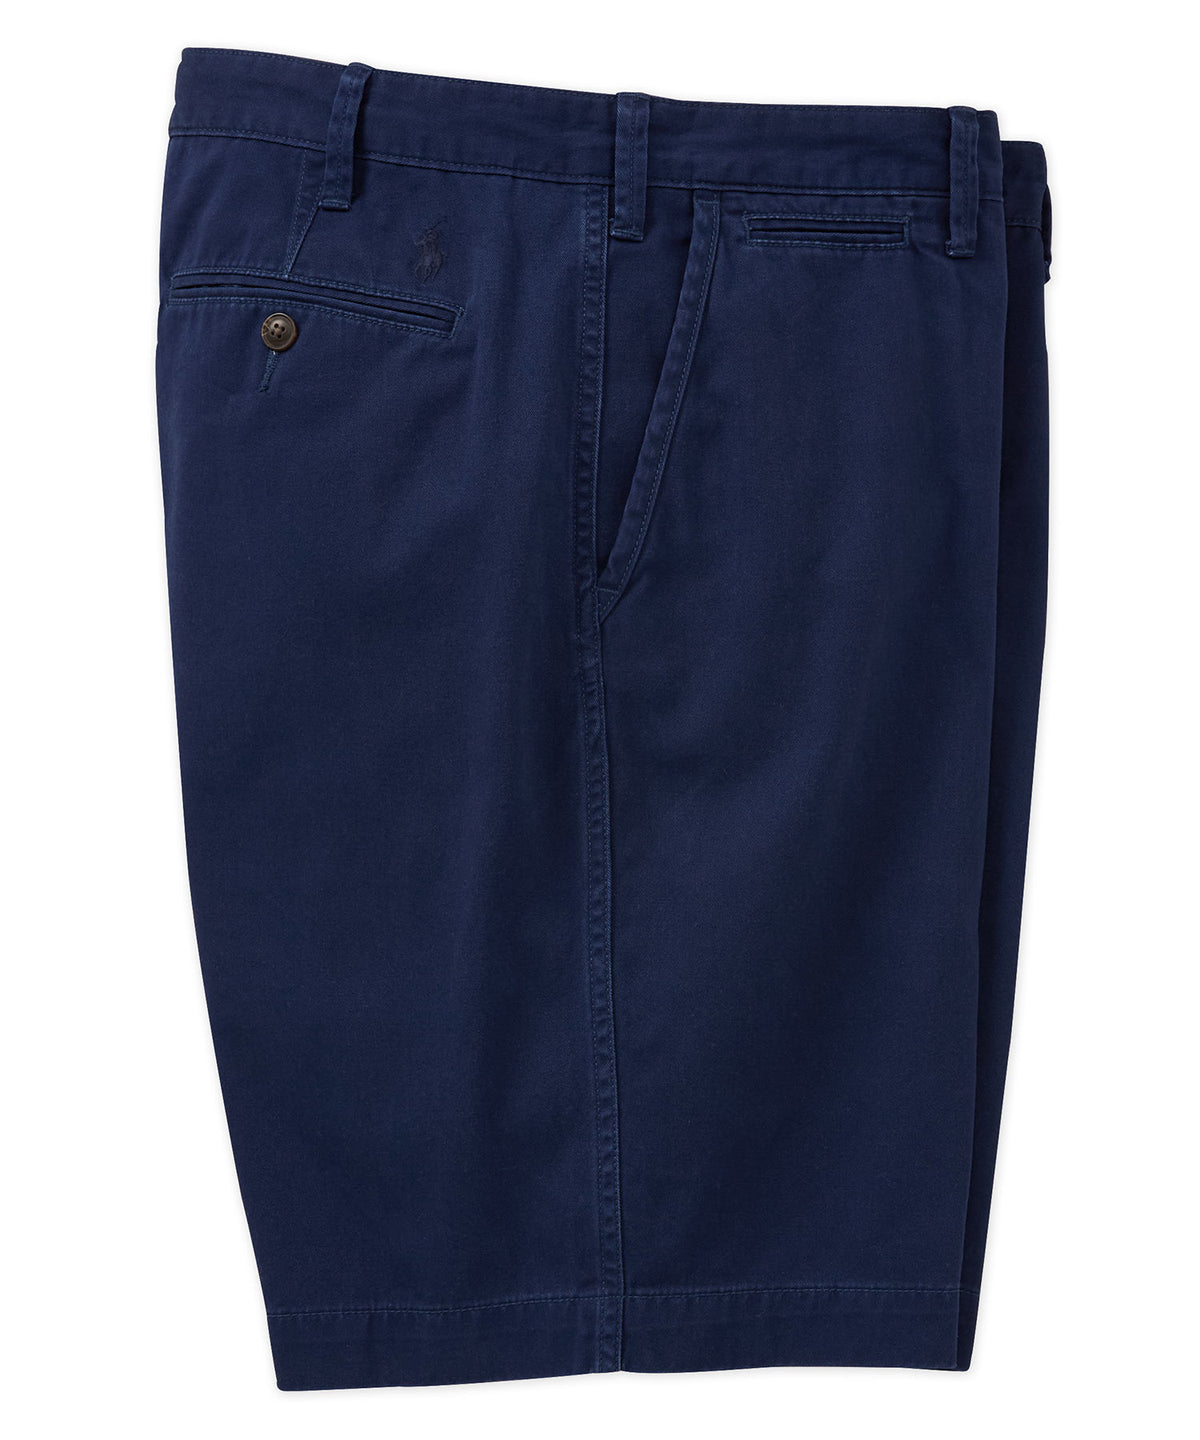 Pantaloncini in eccedenza di Polo Ralph Lauren, Men's Big & Tall